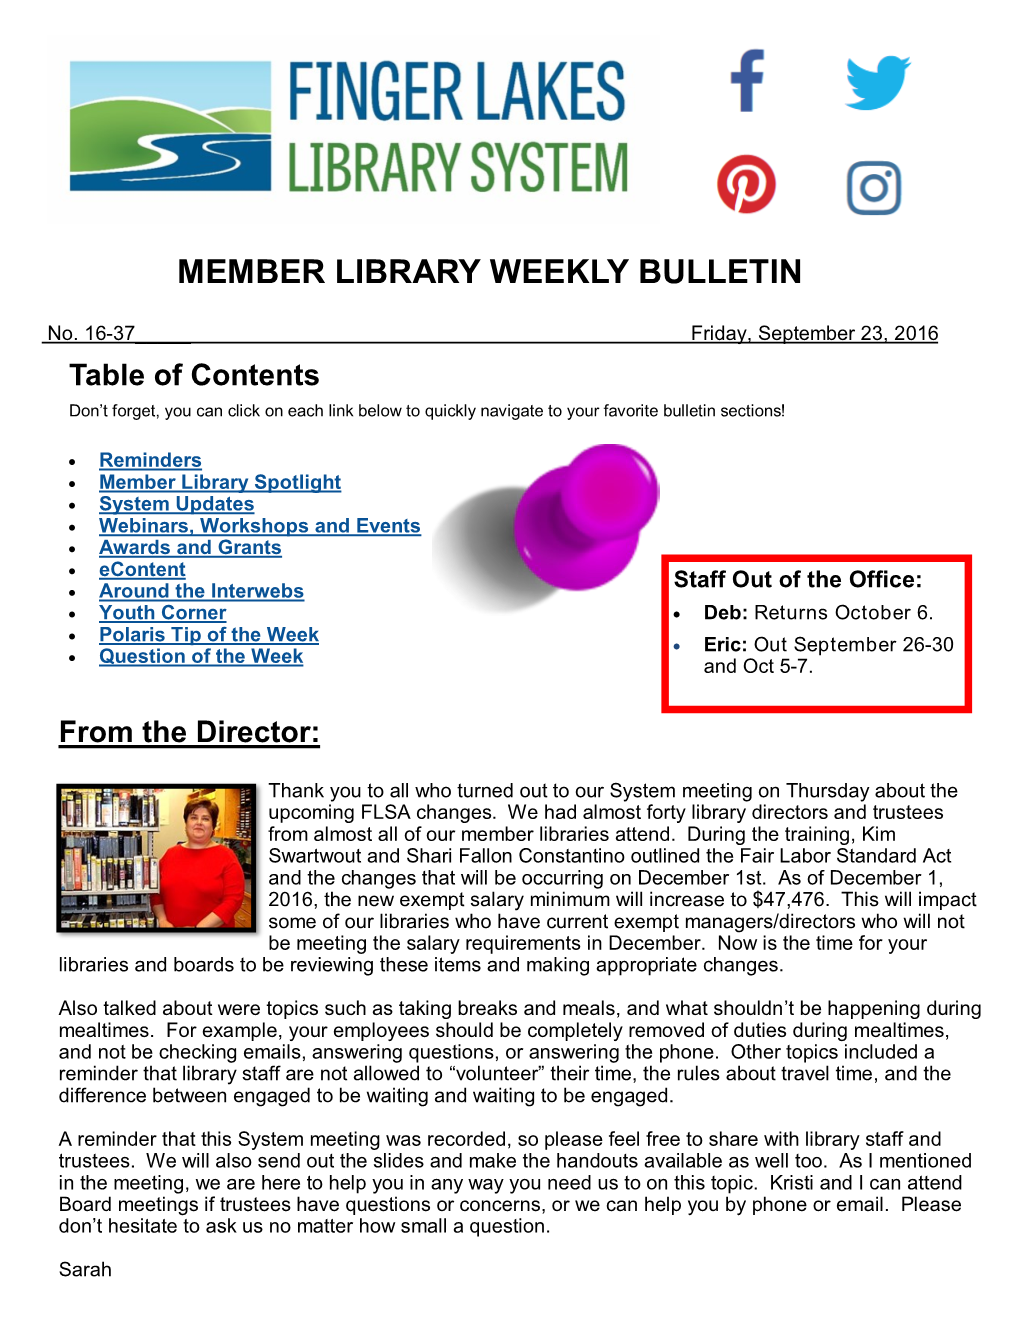 Member Library Weekly Bulletin